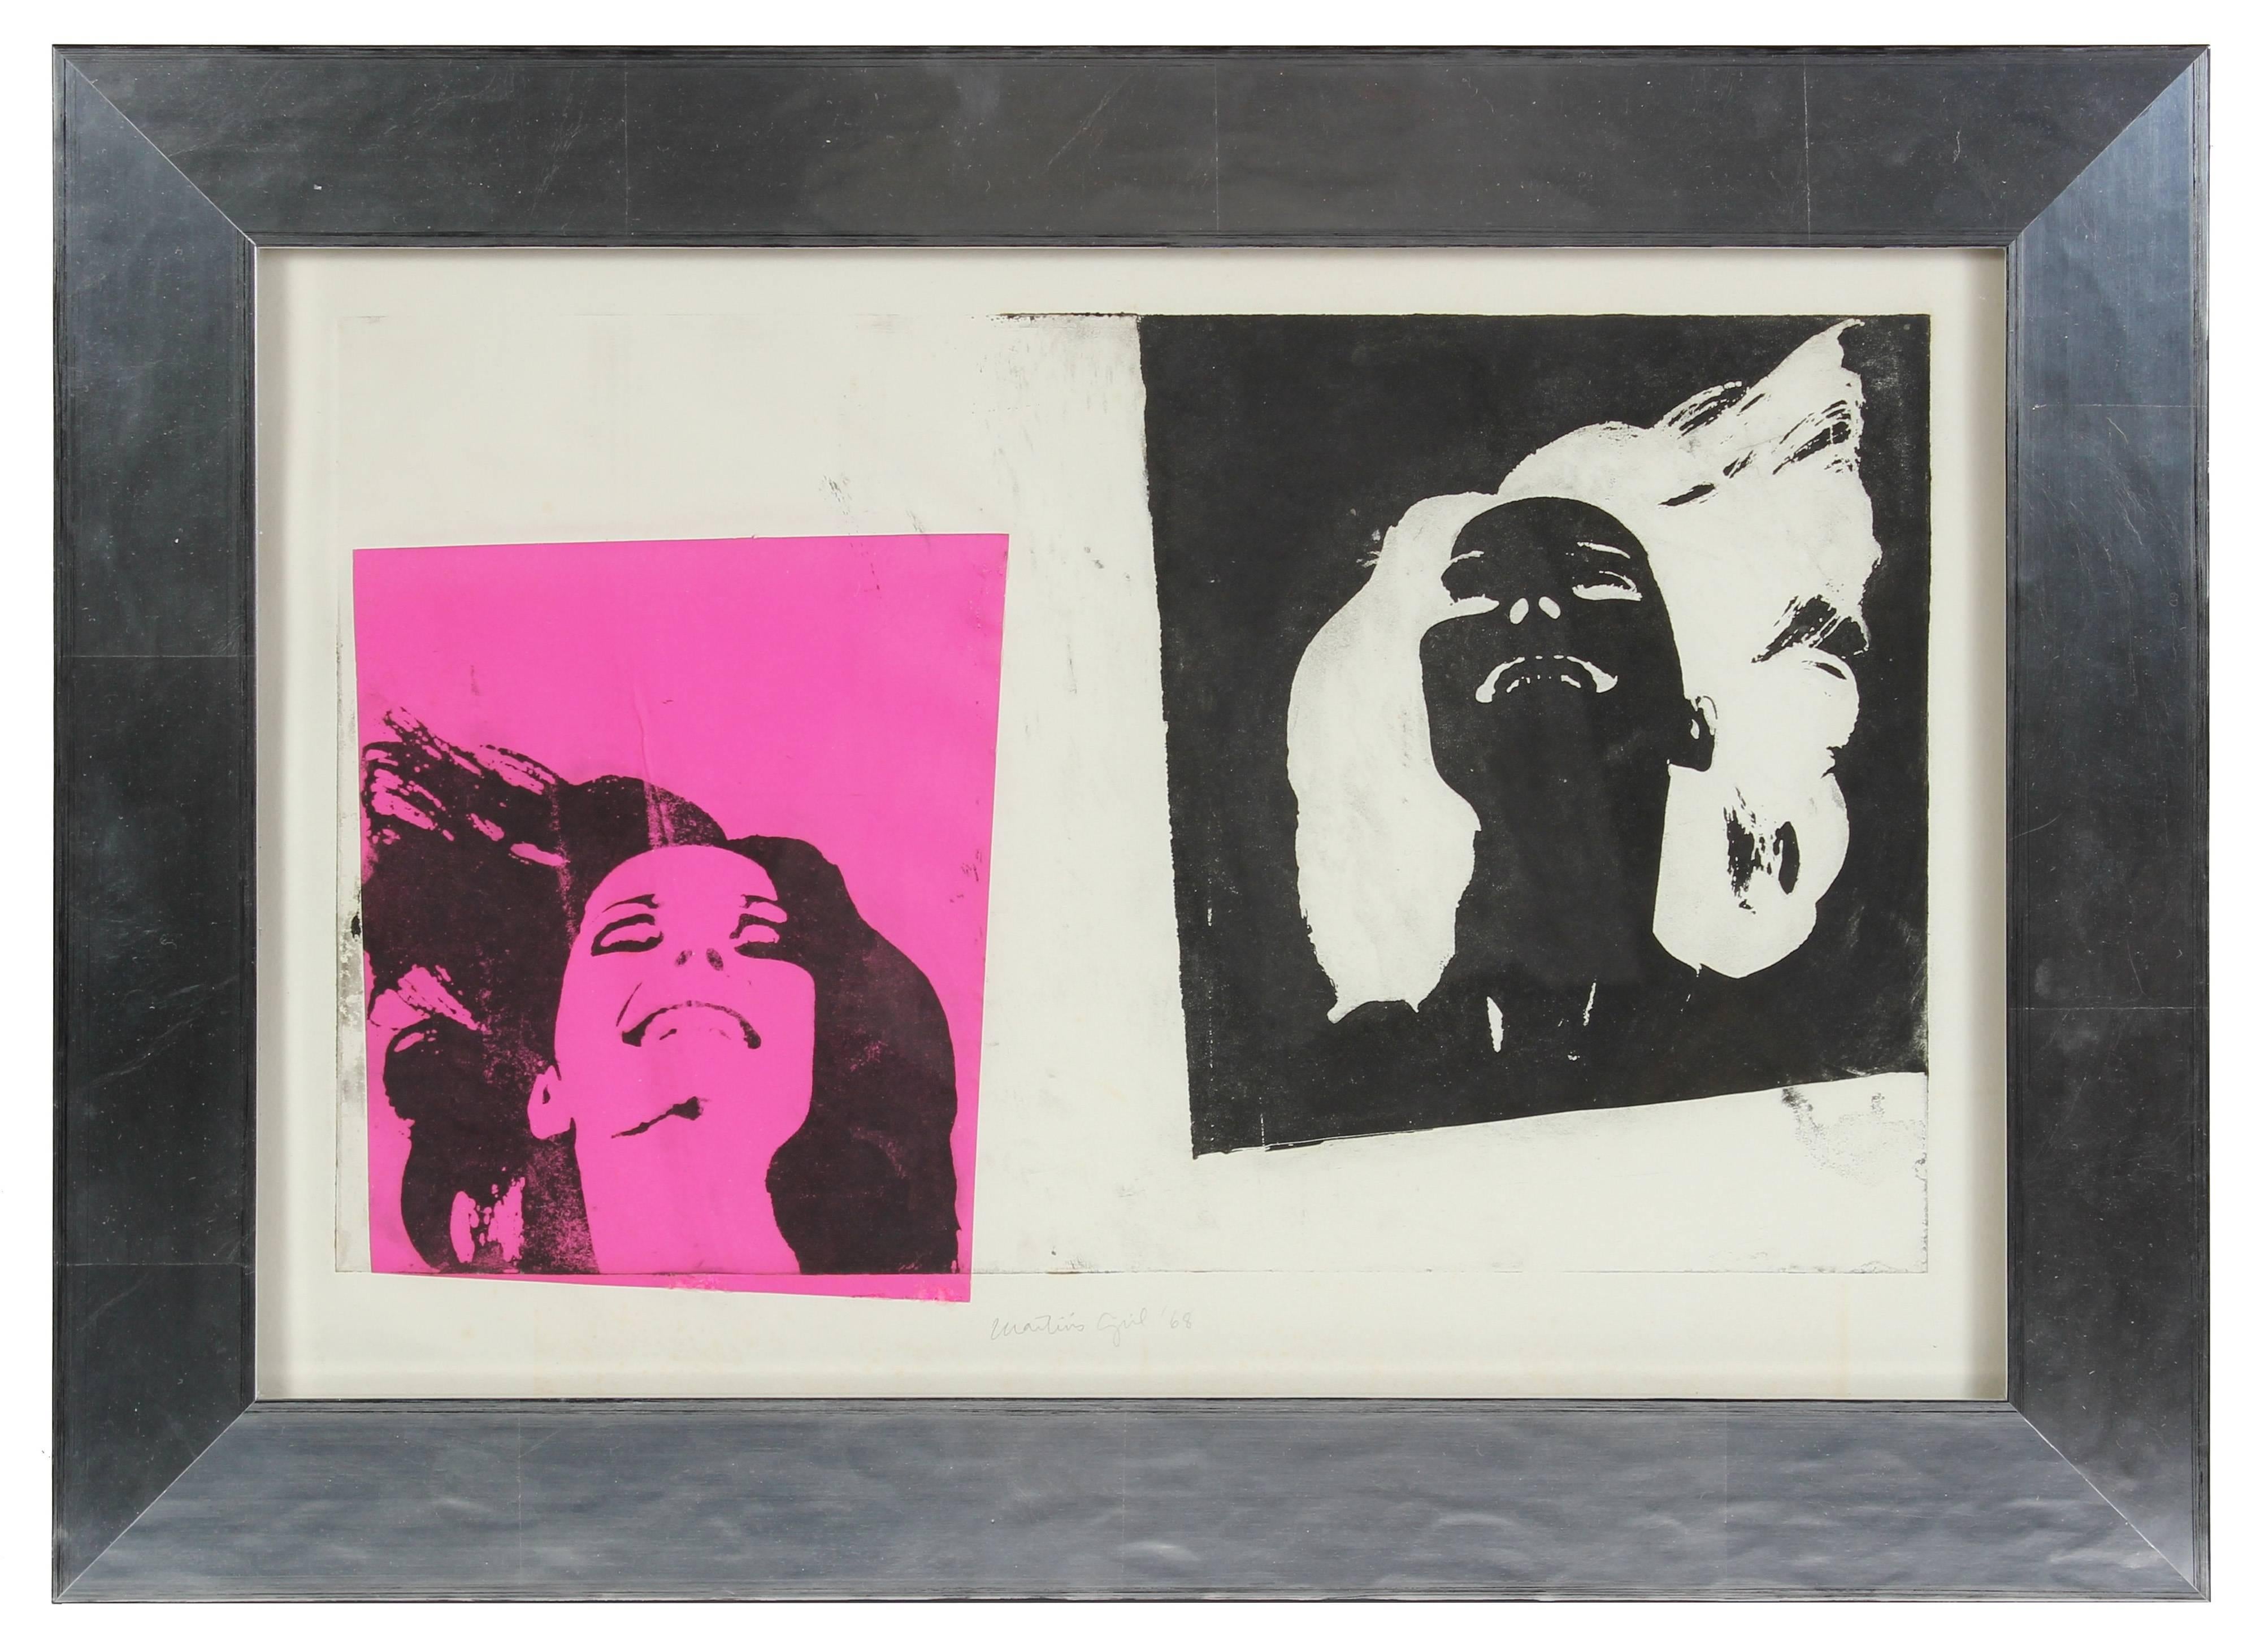 Barbara Lewis Portrait Print - "Martin's Girl" Pop Art Portrait Screen Print in Pink & Black, 1968